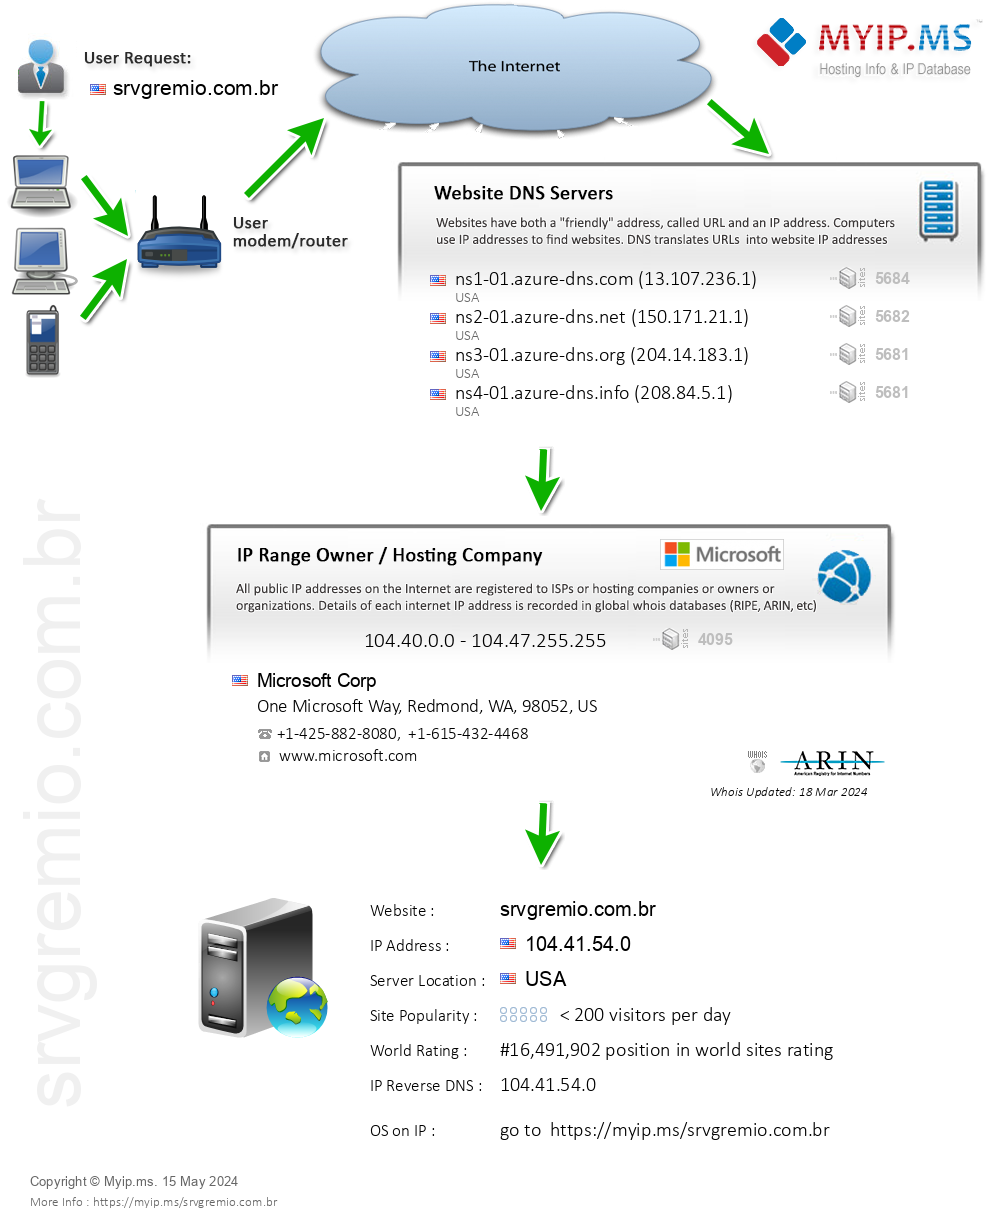 Srvgremio.com.br - Website Hosting Visual IP Diagram